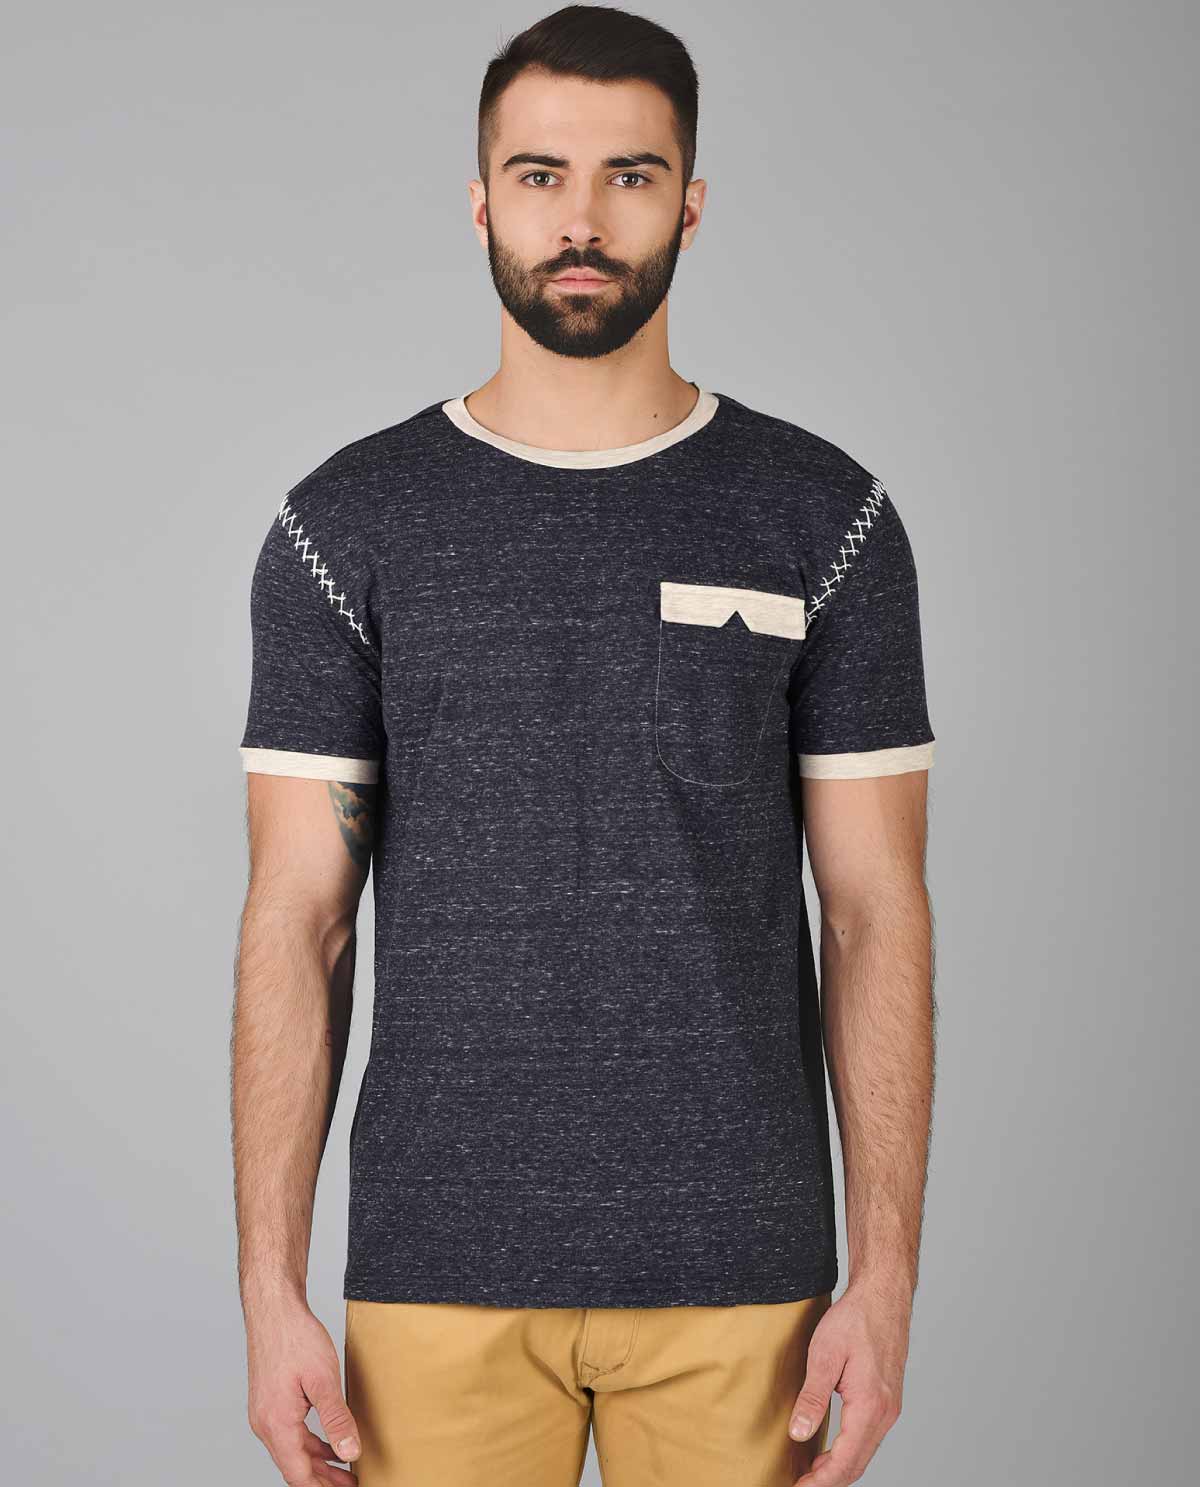 Black-withWhite-Print-Tshirt-for-Men-2 - Kashvi Designs